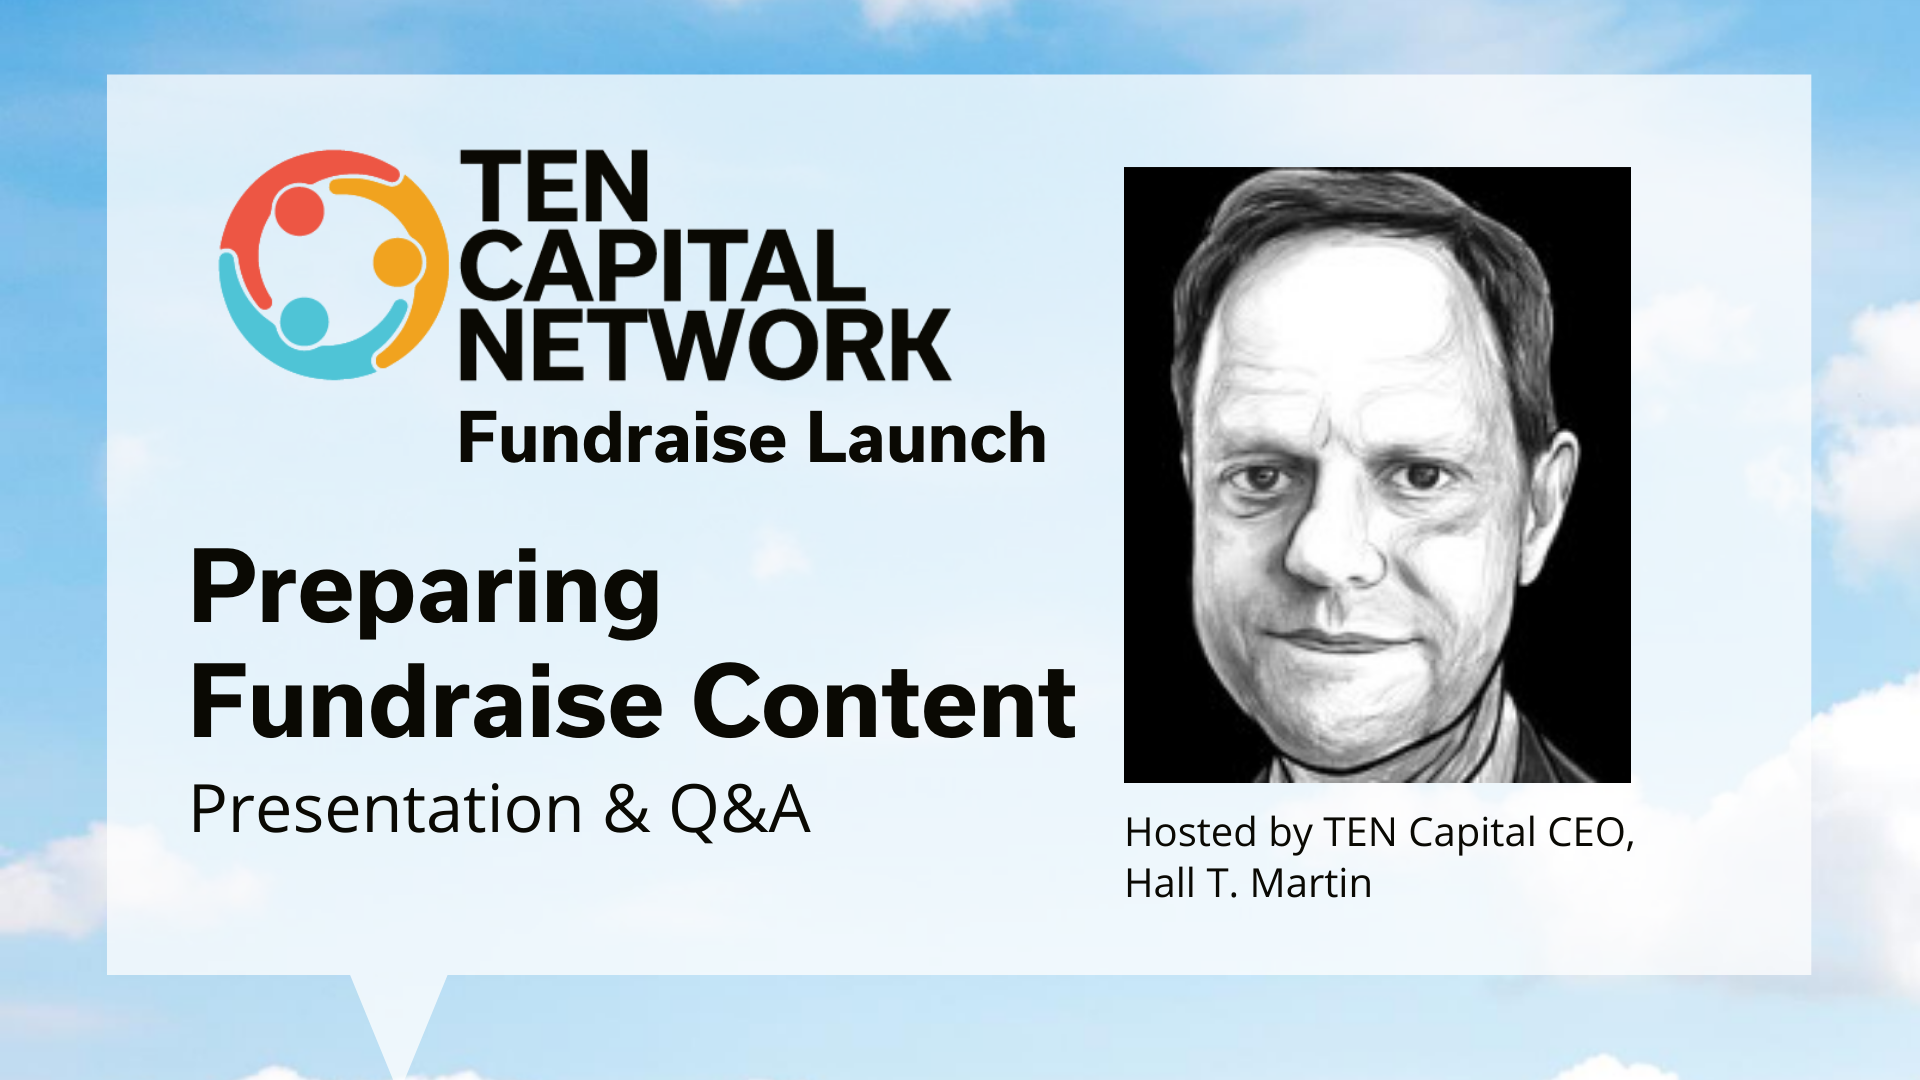 TEN Capital Fundraise Launch Program: How to Prepare Fundraise Content